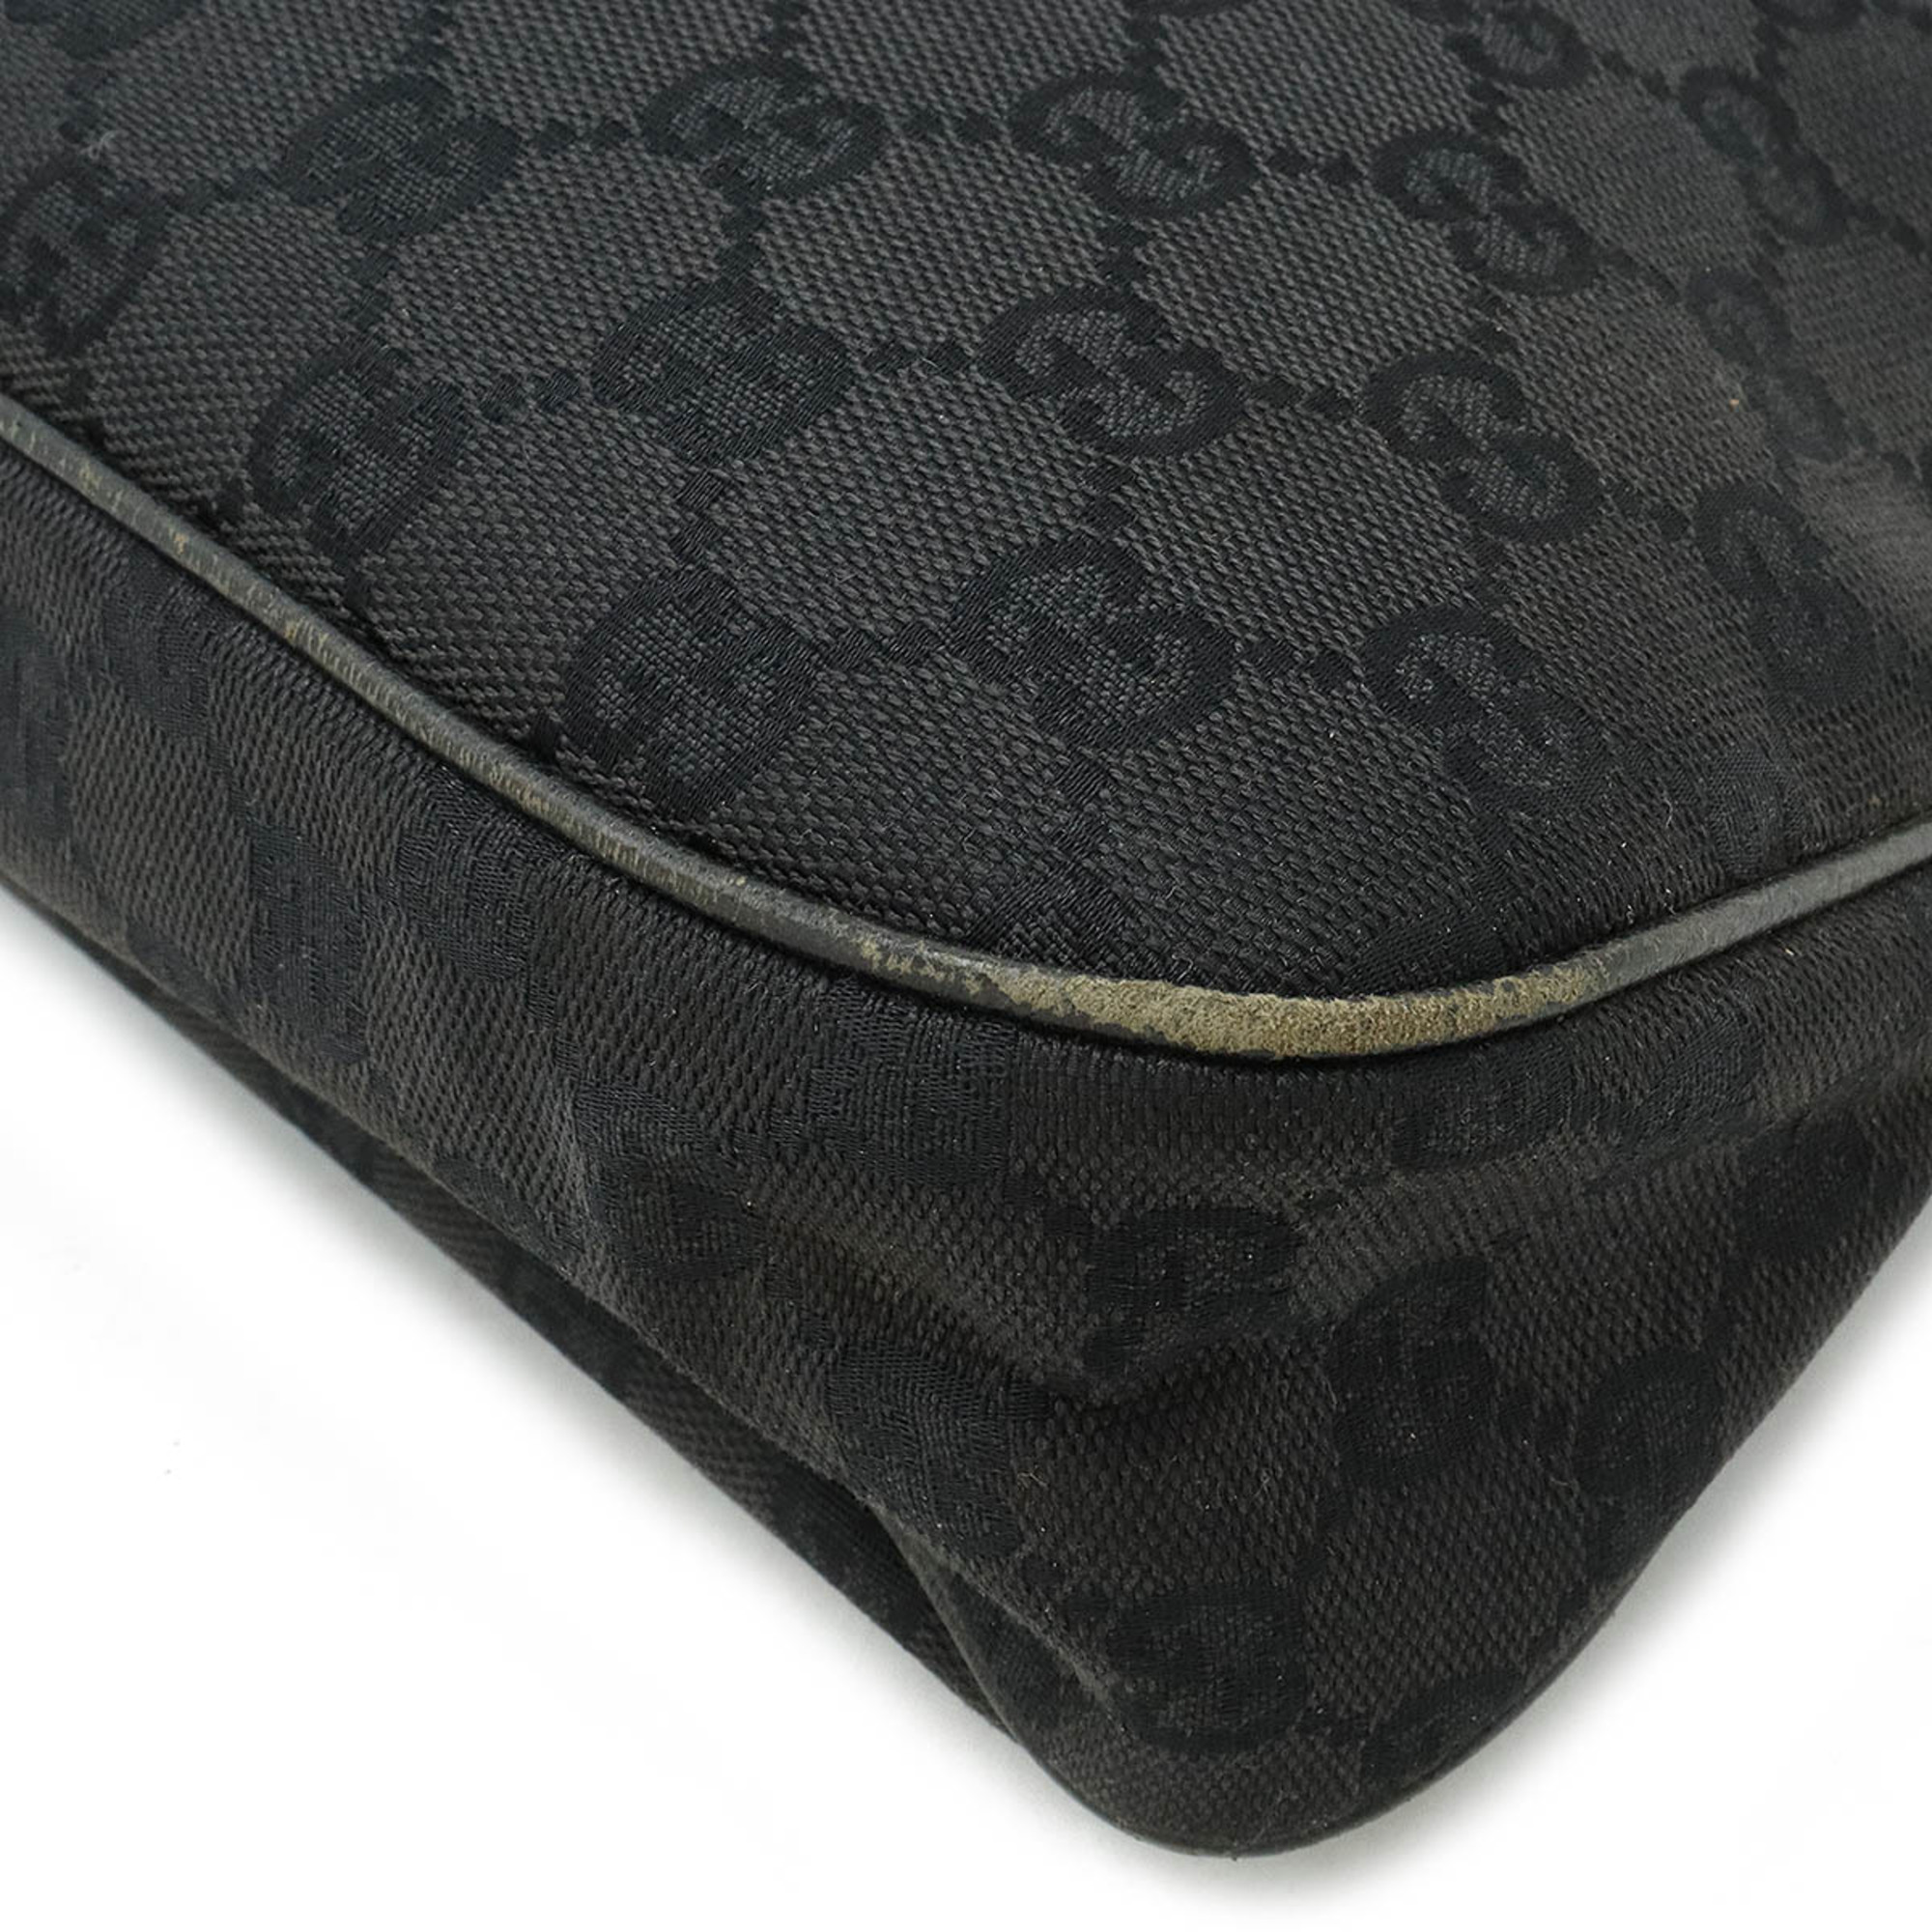 GUCCI GG canvas shoulder bag tote leather black 121023